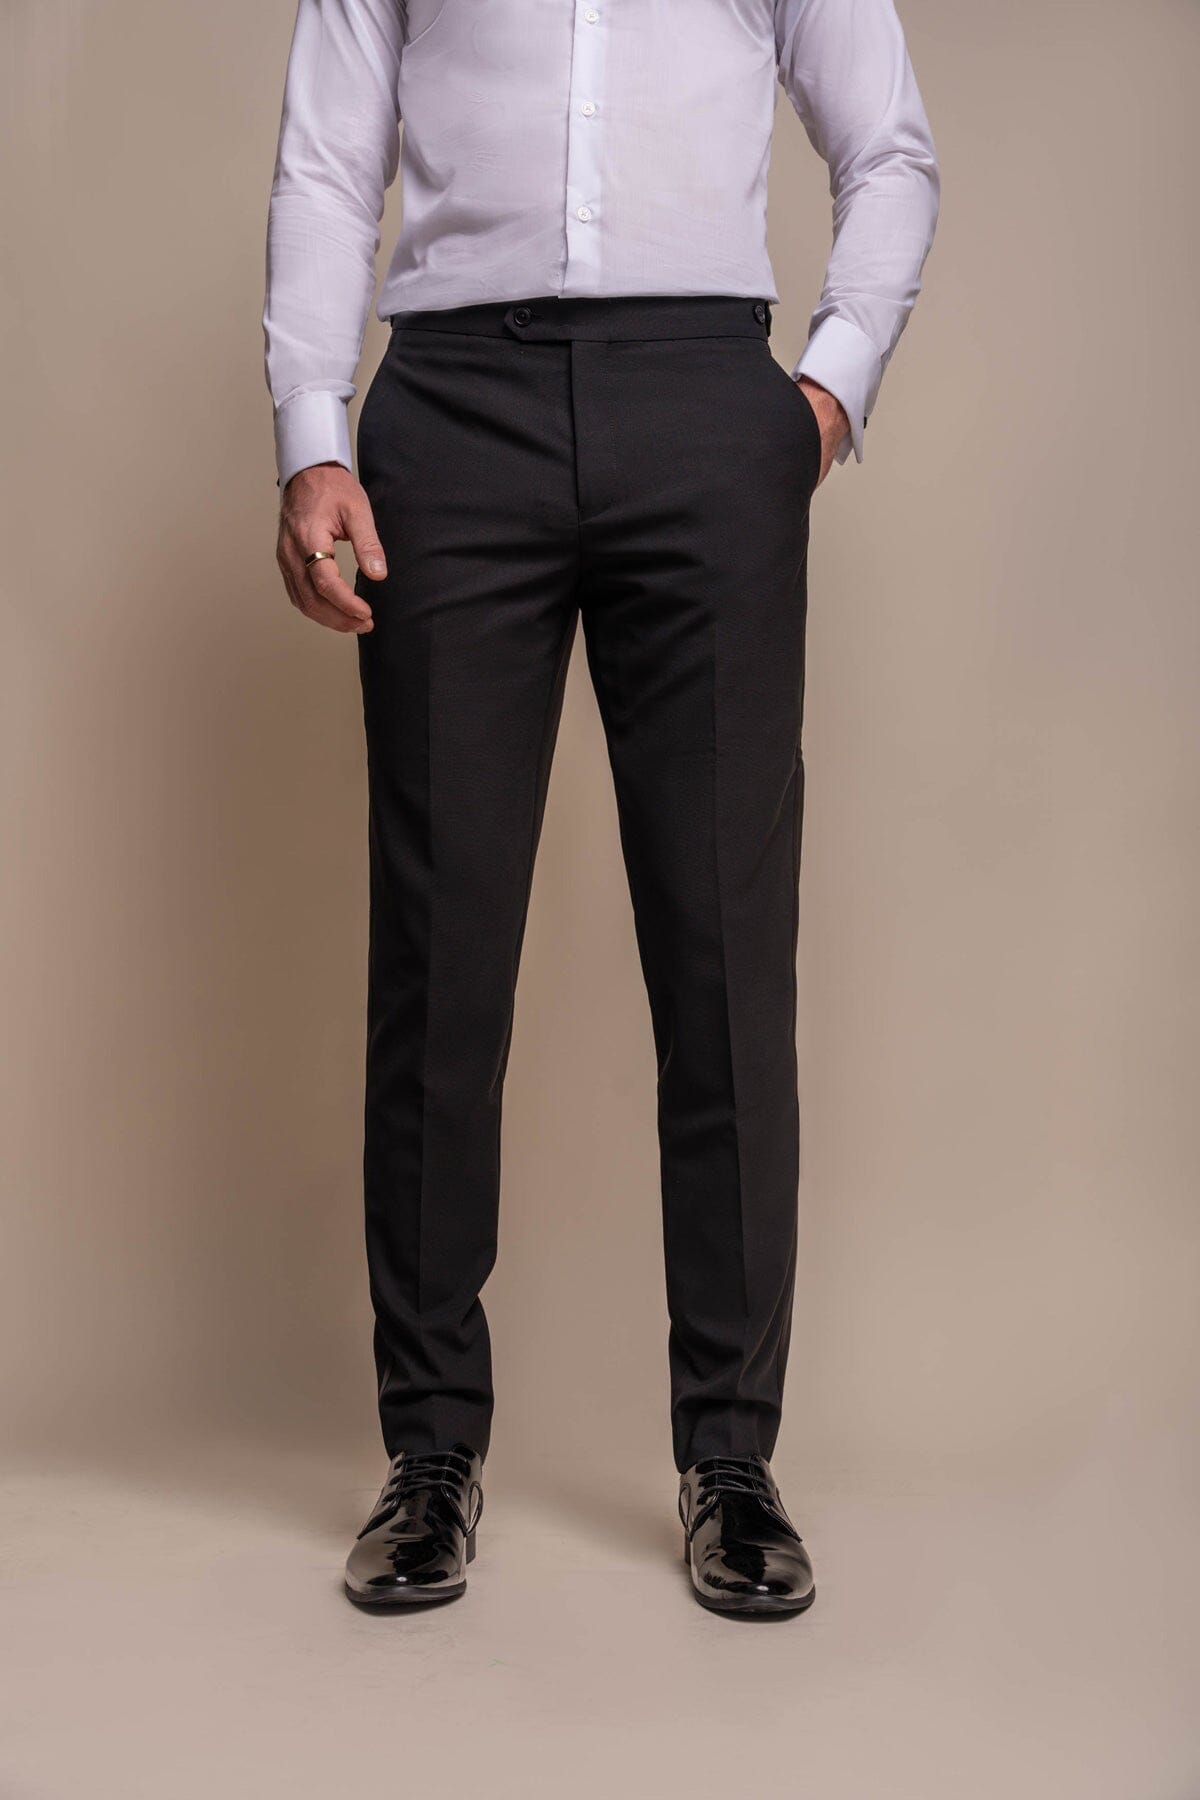 Aspen Black Tuxedo Trousers - Trousers - 28R 